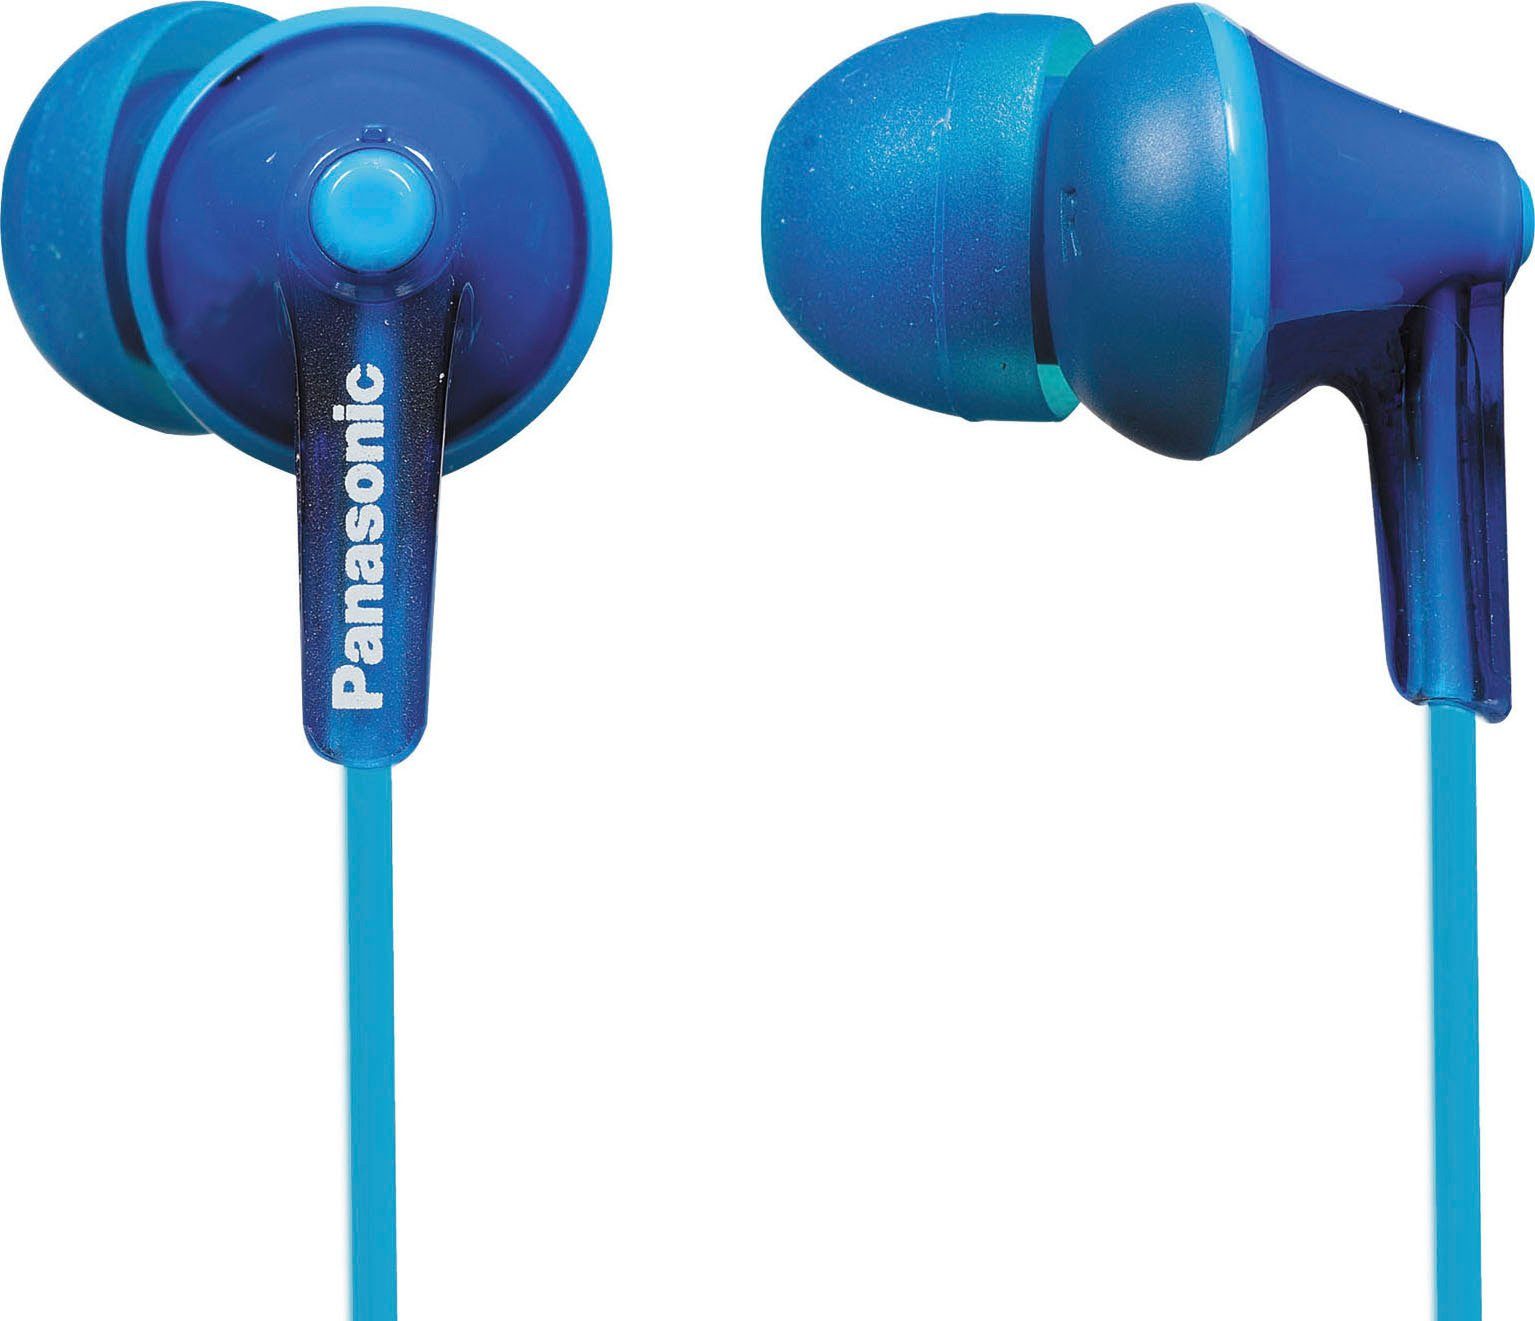 blau RP-HJE125 Panasonic In-Ear-Kopfhörer